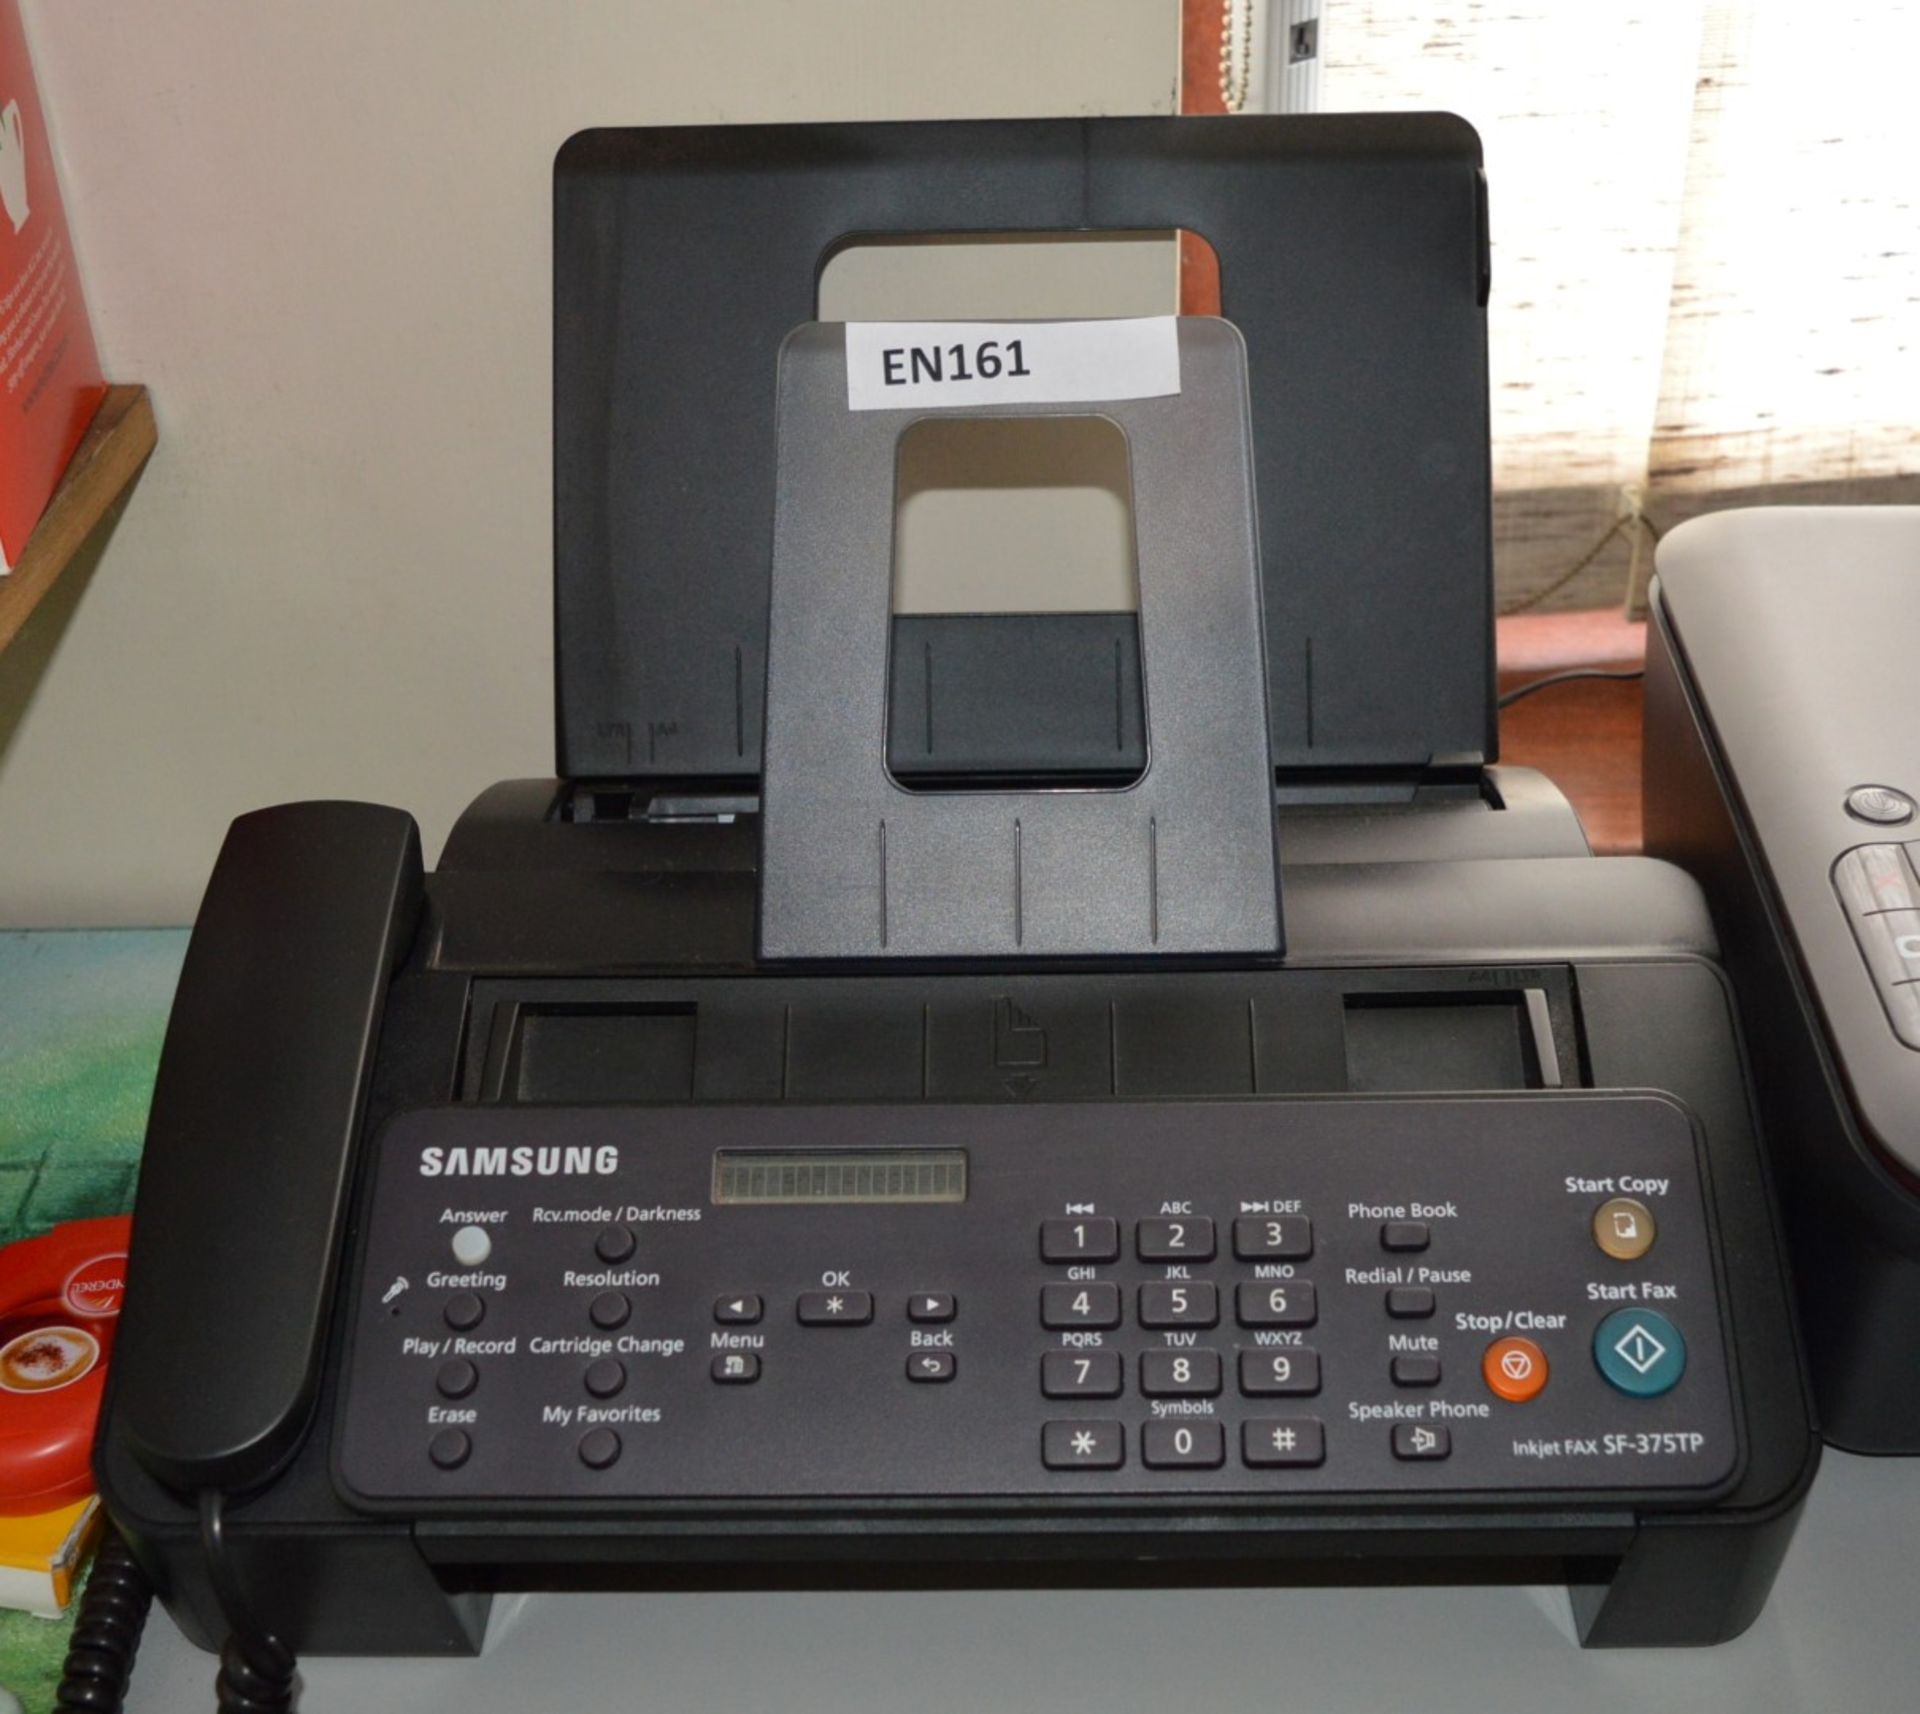 1 x Samsung Fax Machine - Model SF-375TP - CL202 - Ref EN161 - Location: Worcester WR14